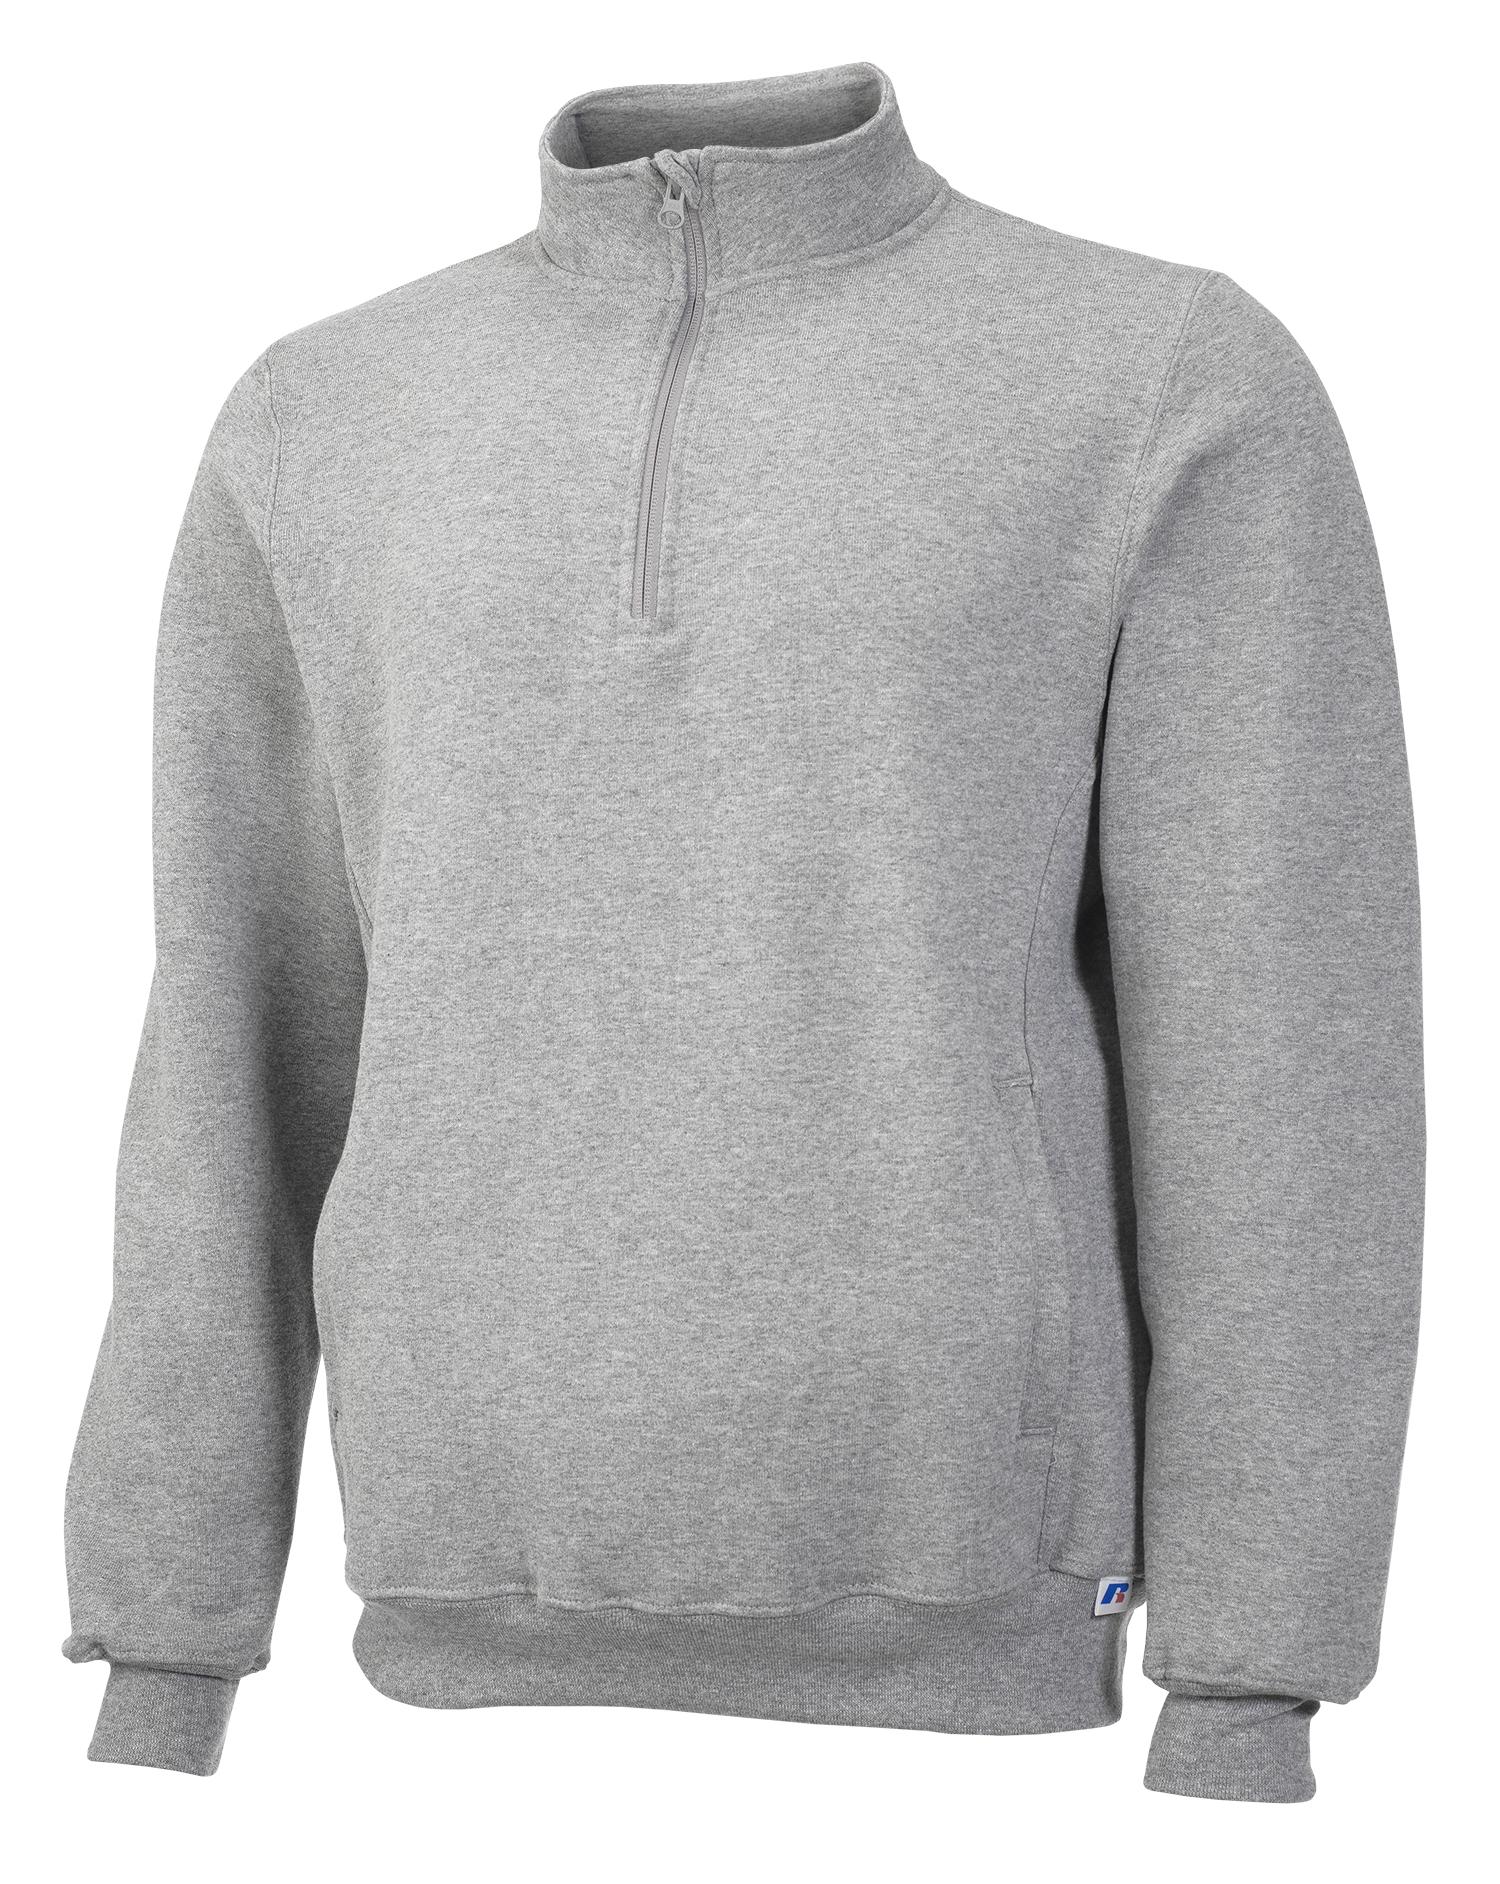 Russell Athletic DRI-POWER 1/4 Zip Sweatshirt